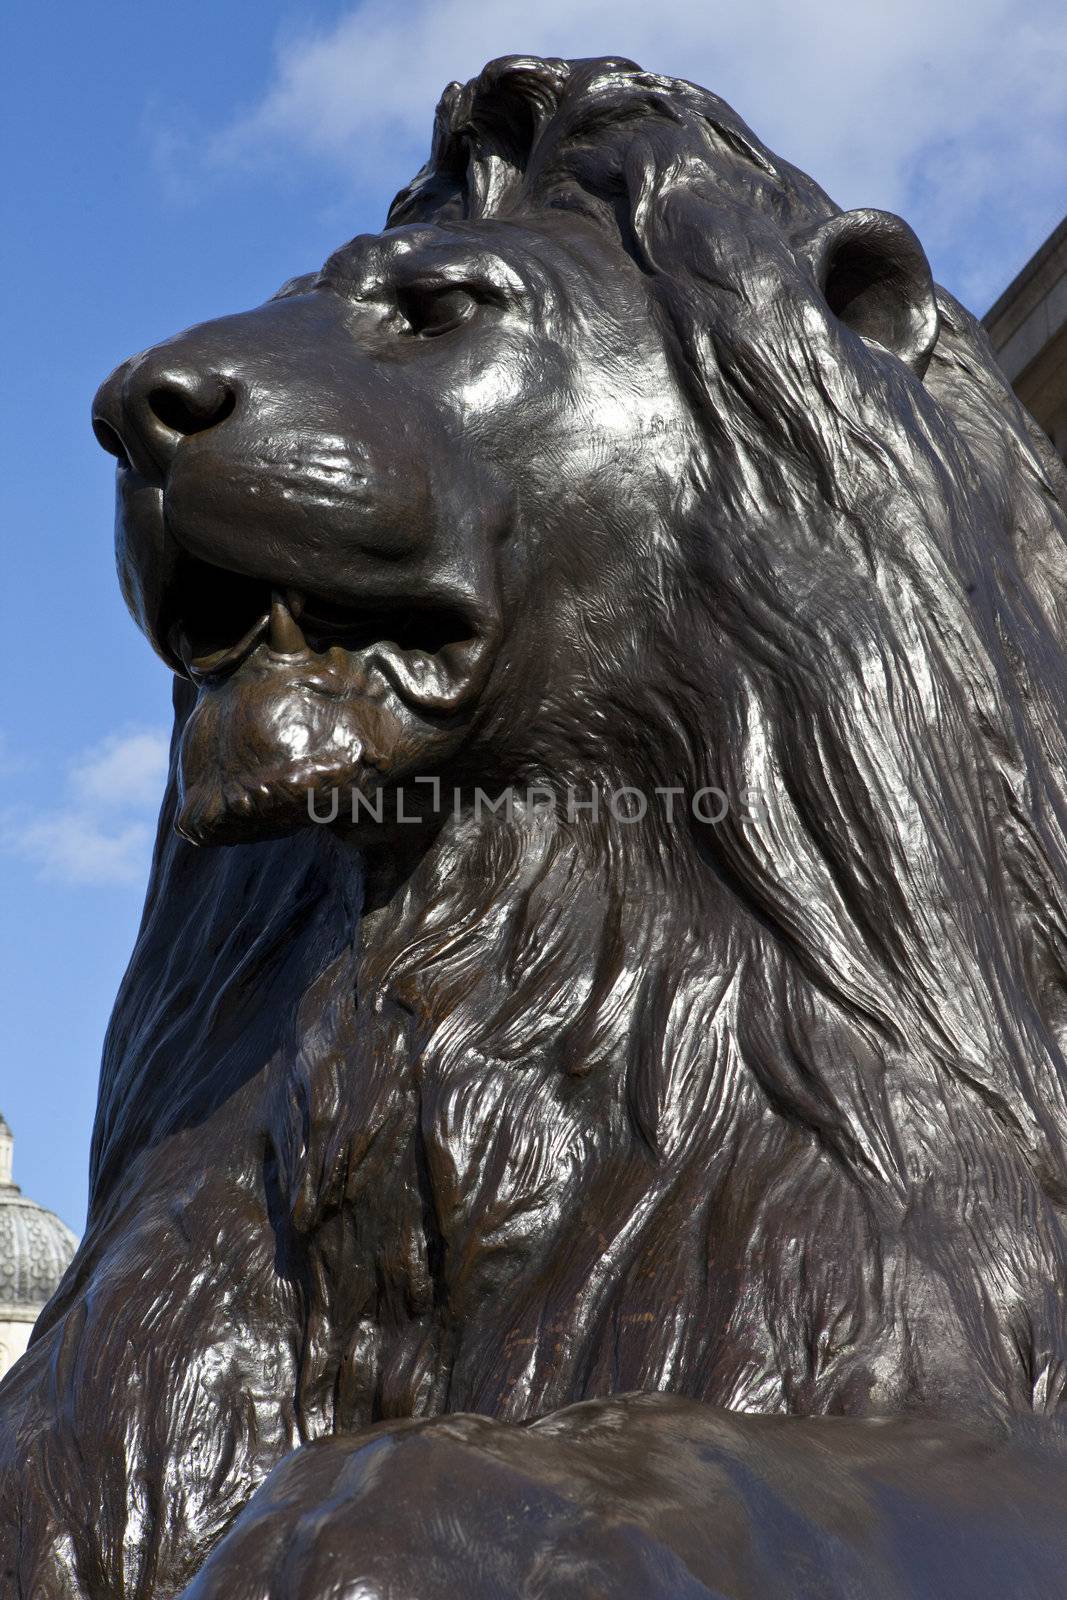 Lion statue in Trafalgar Square, London.